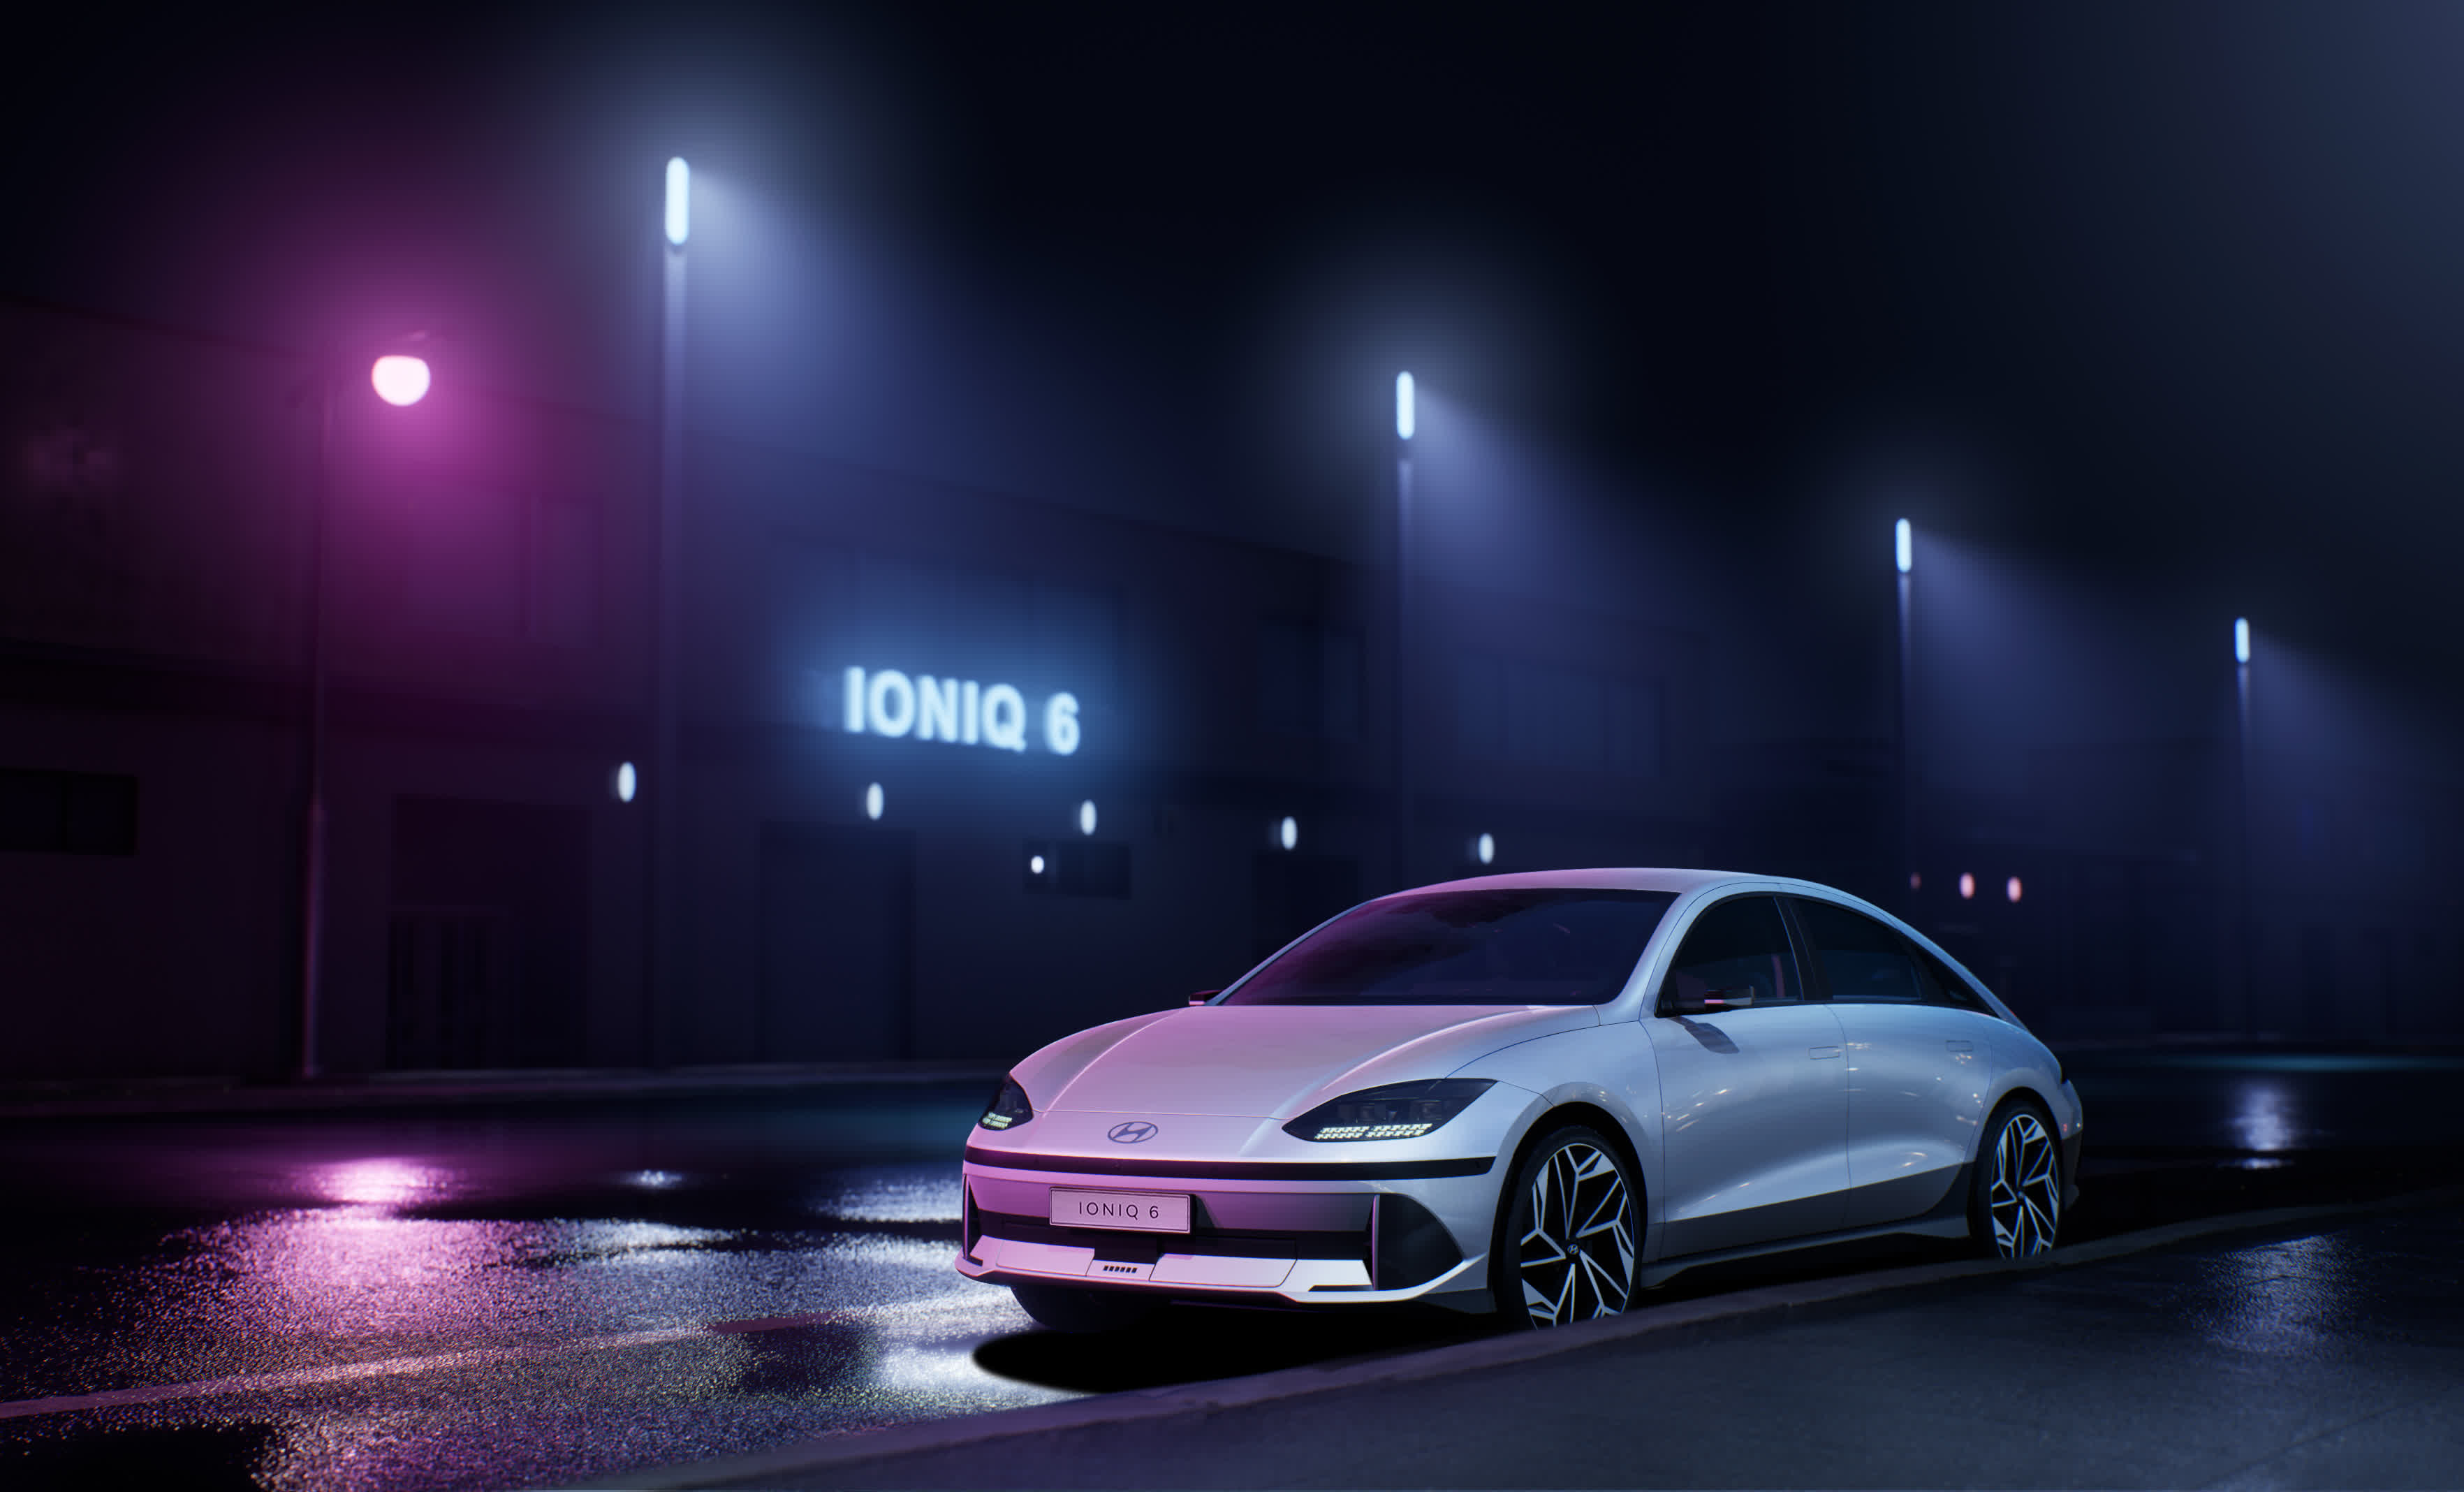 Hyundai shares first look at the much-awaited Ioniq 6 electric sedan